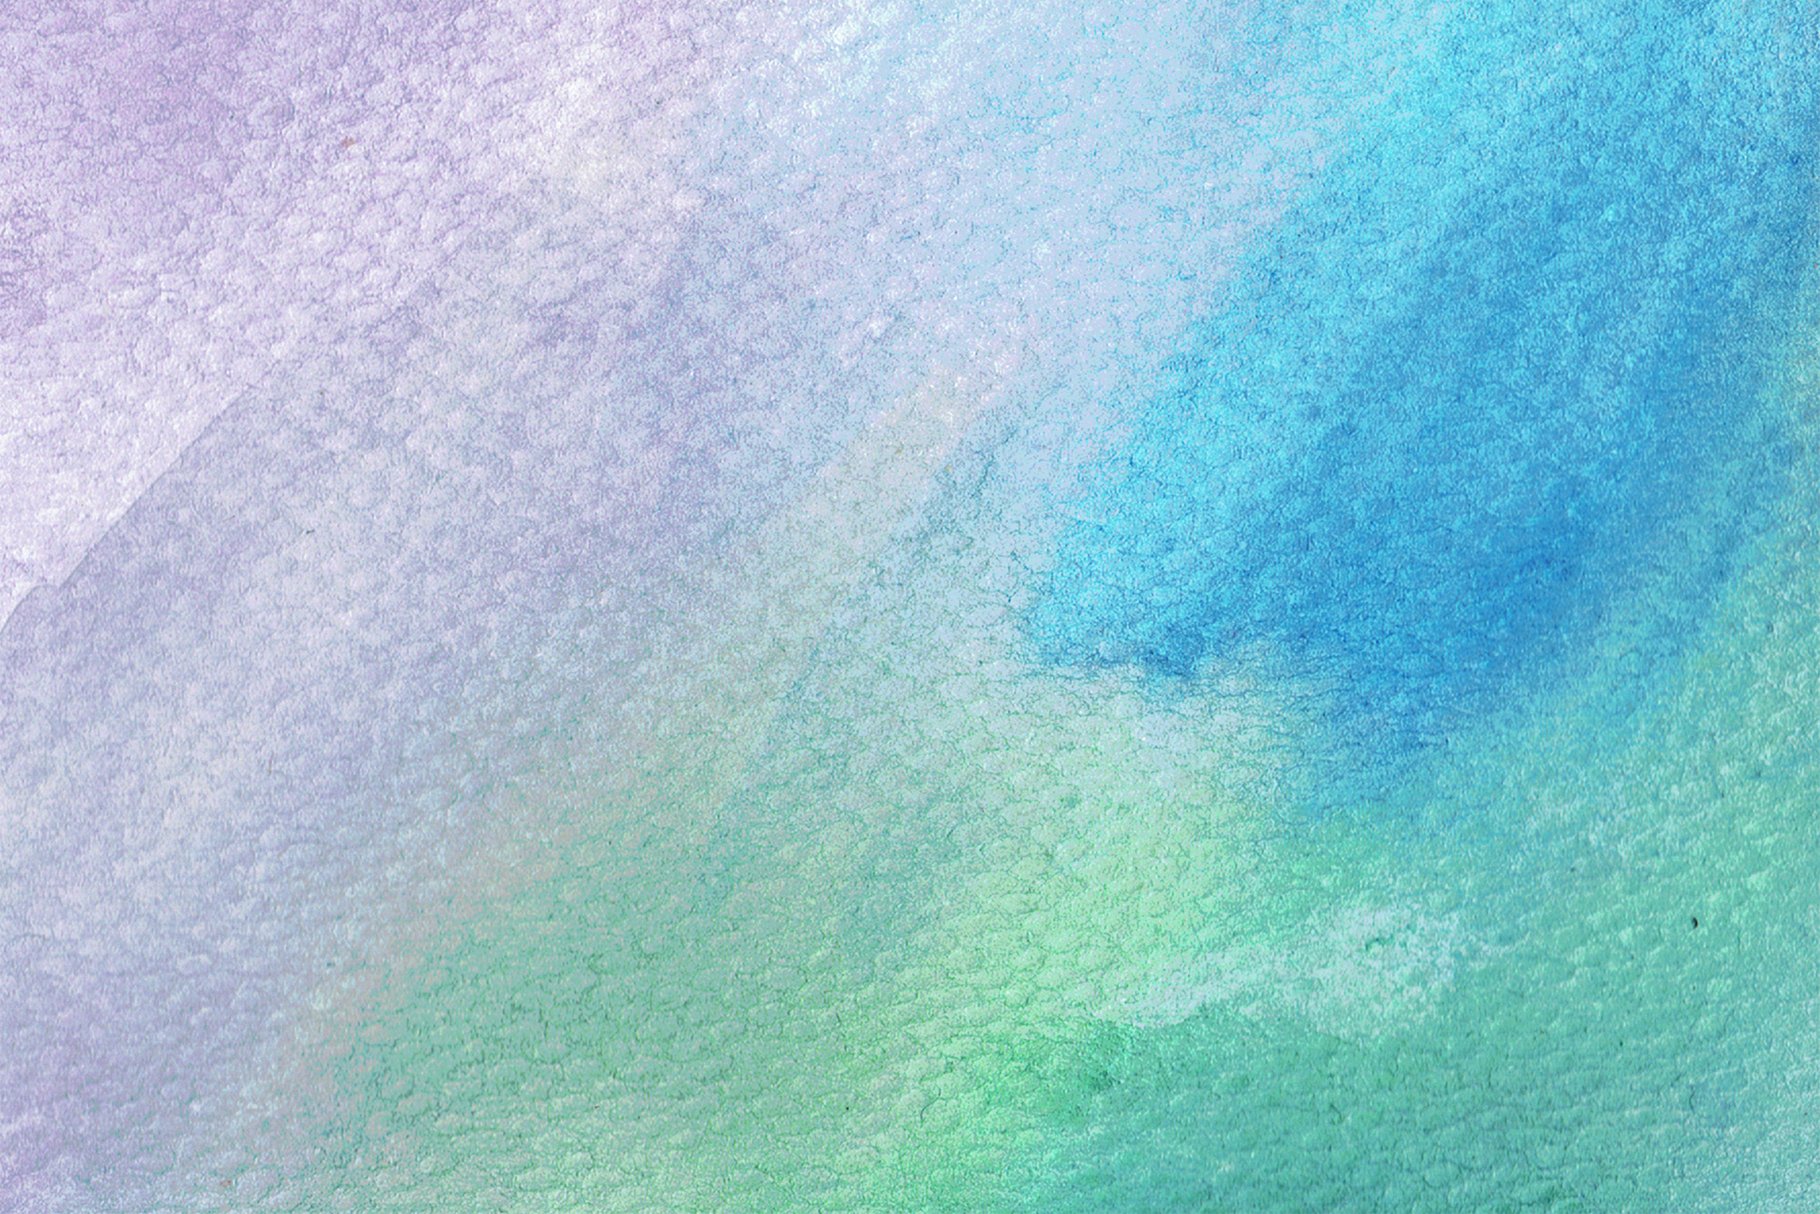 Purple Watercolor Background